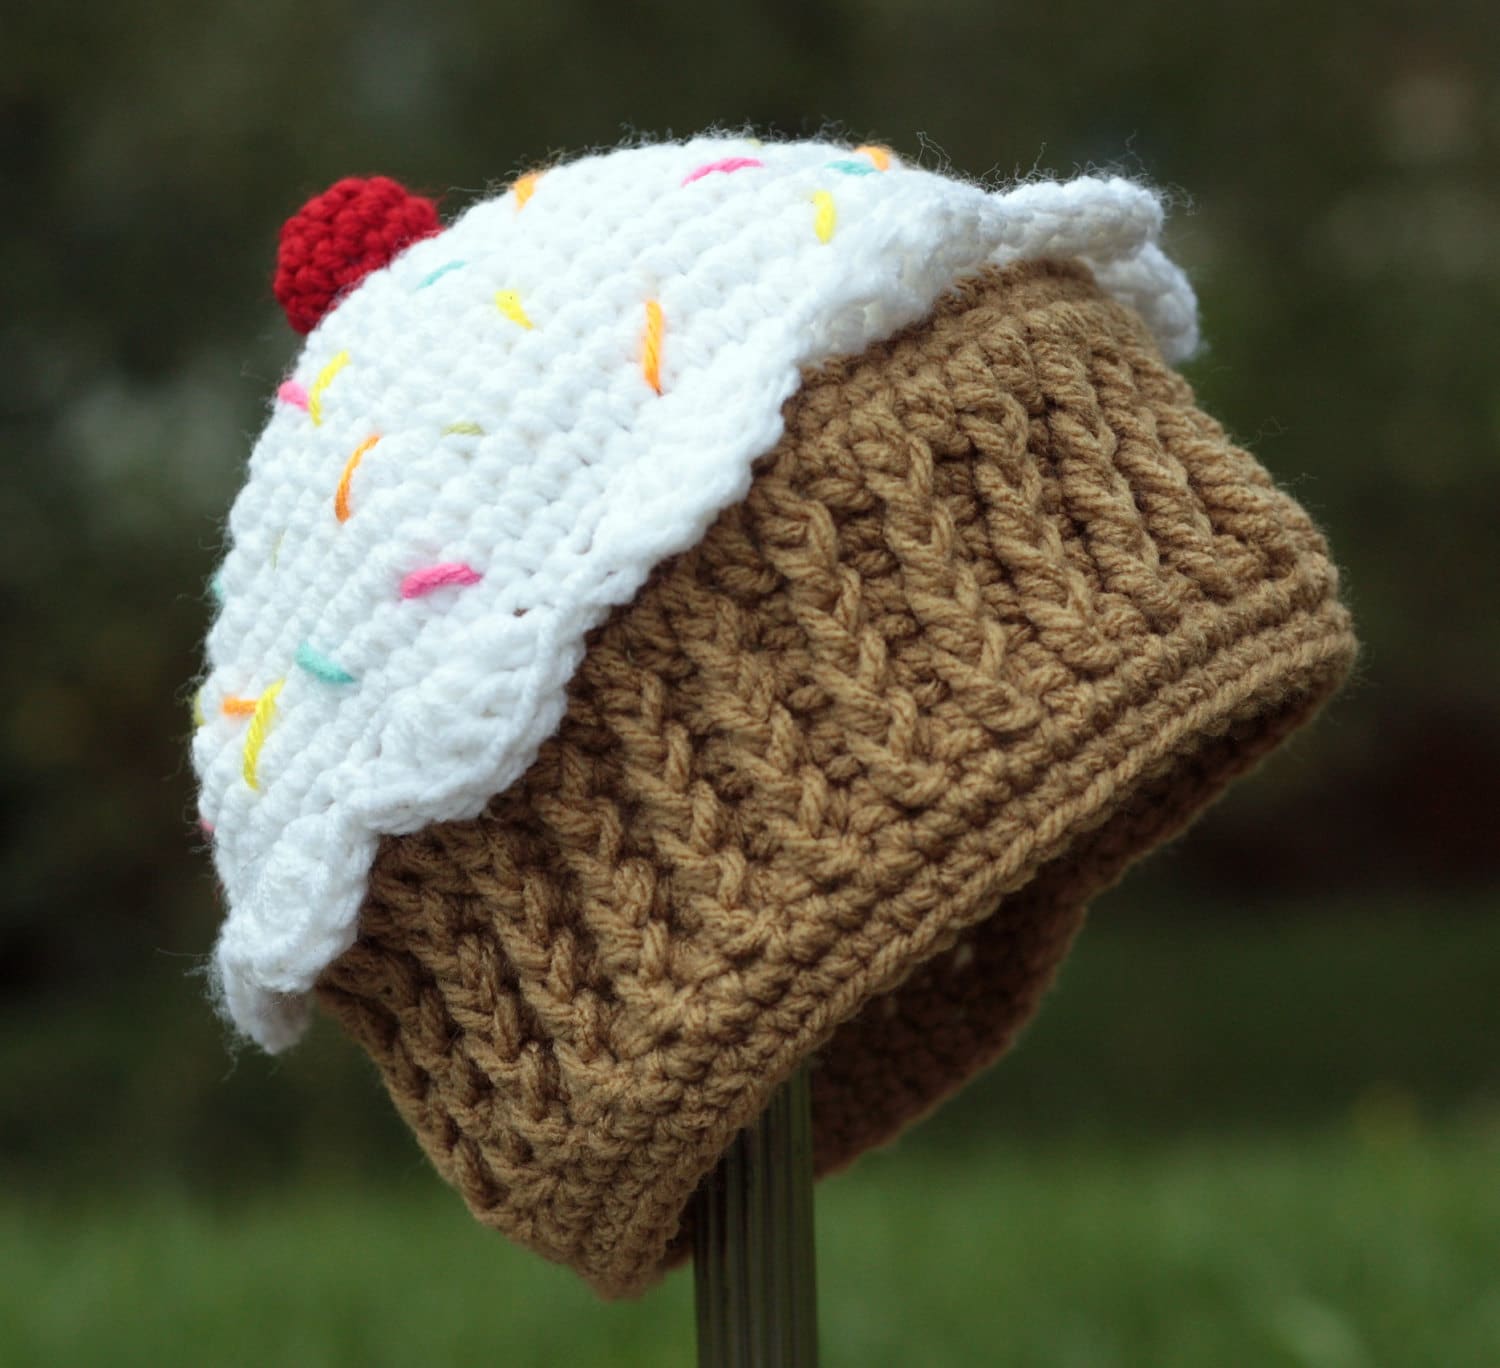 Crochet Pattern for Making a Crochet One Year Cupcake by jspirik